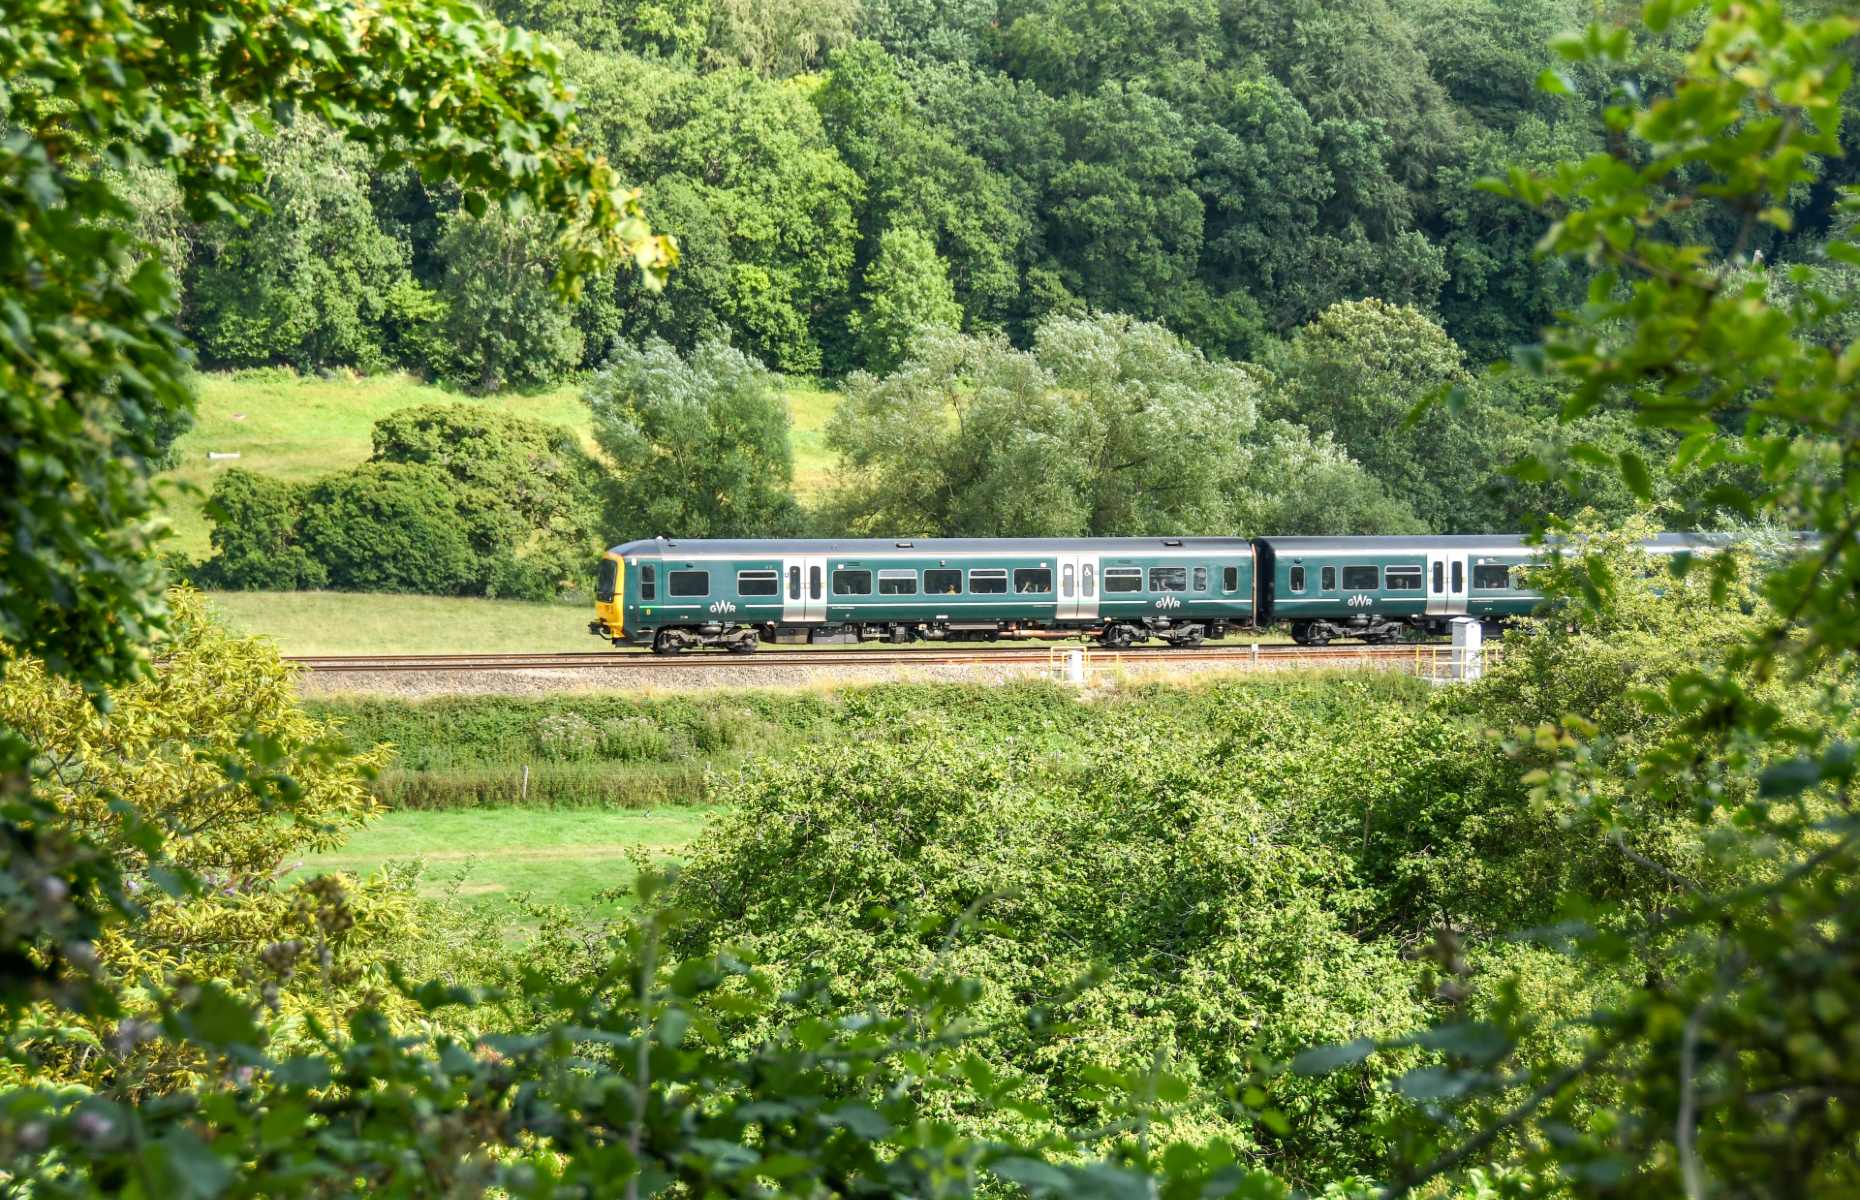 Train from London to Bristol [Image: Ceri Breeze/Shutterstock]